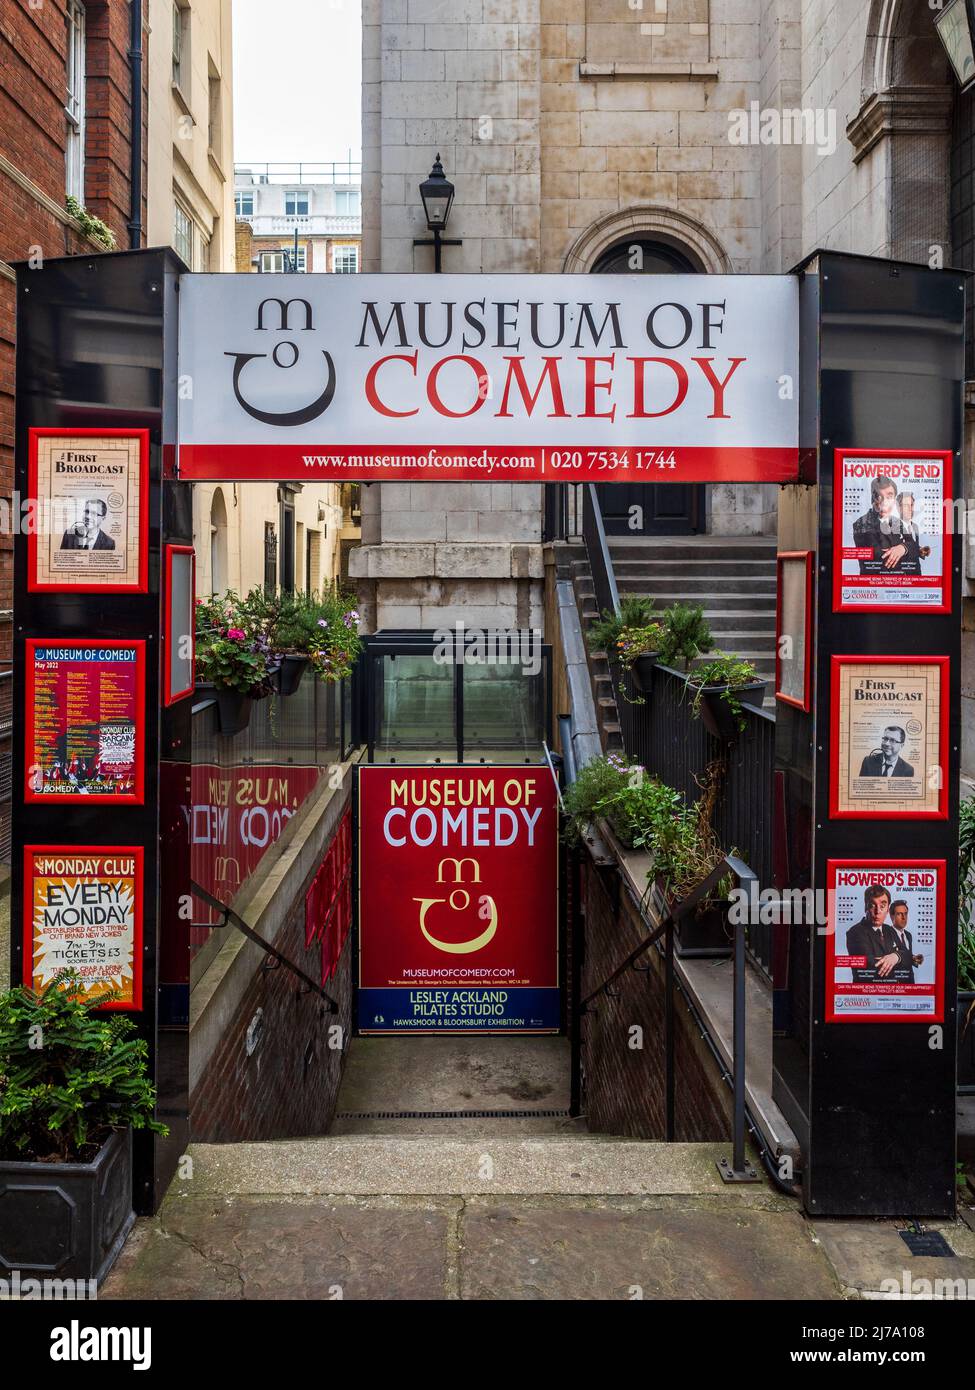 Museum of Comedy London in der Krypta der St. George’s Church Bloomsbury Way London. London Comedy Venue wurde 2014 gegründet. Stockfoto